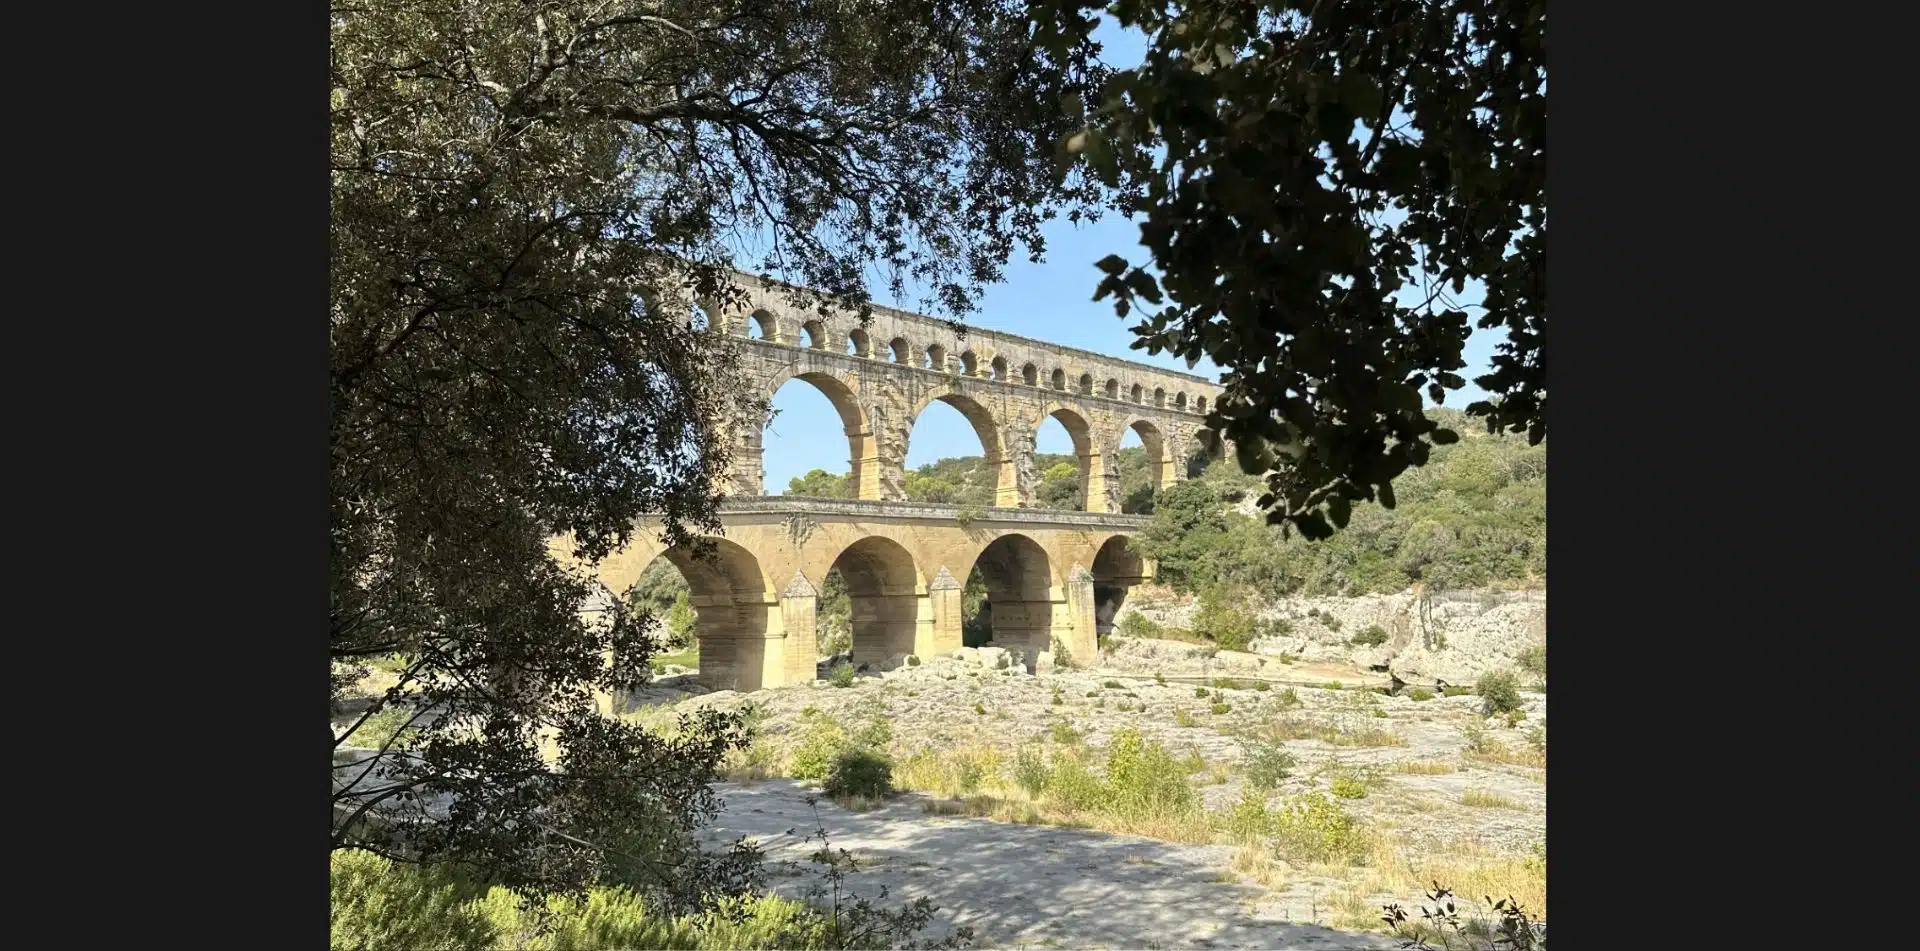 2 - Marvel at the stunning Pont du Gard aqueduct in Provence, France